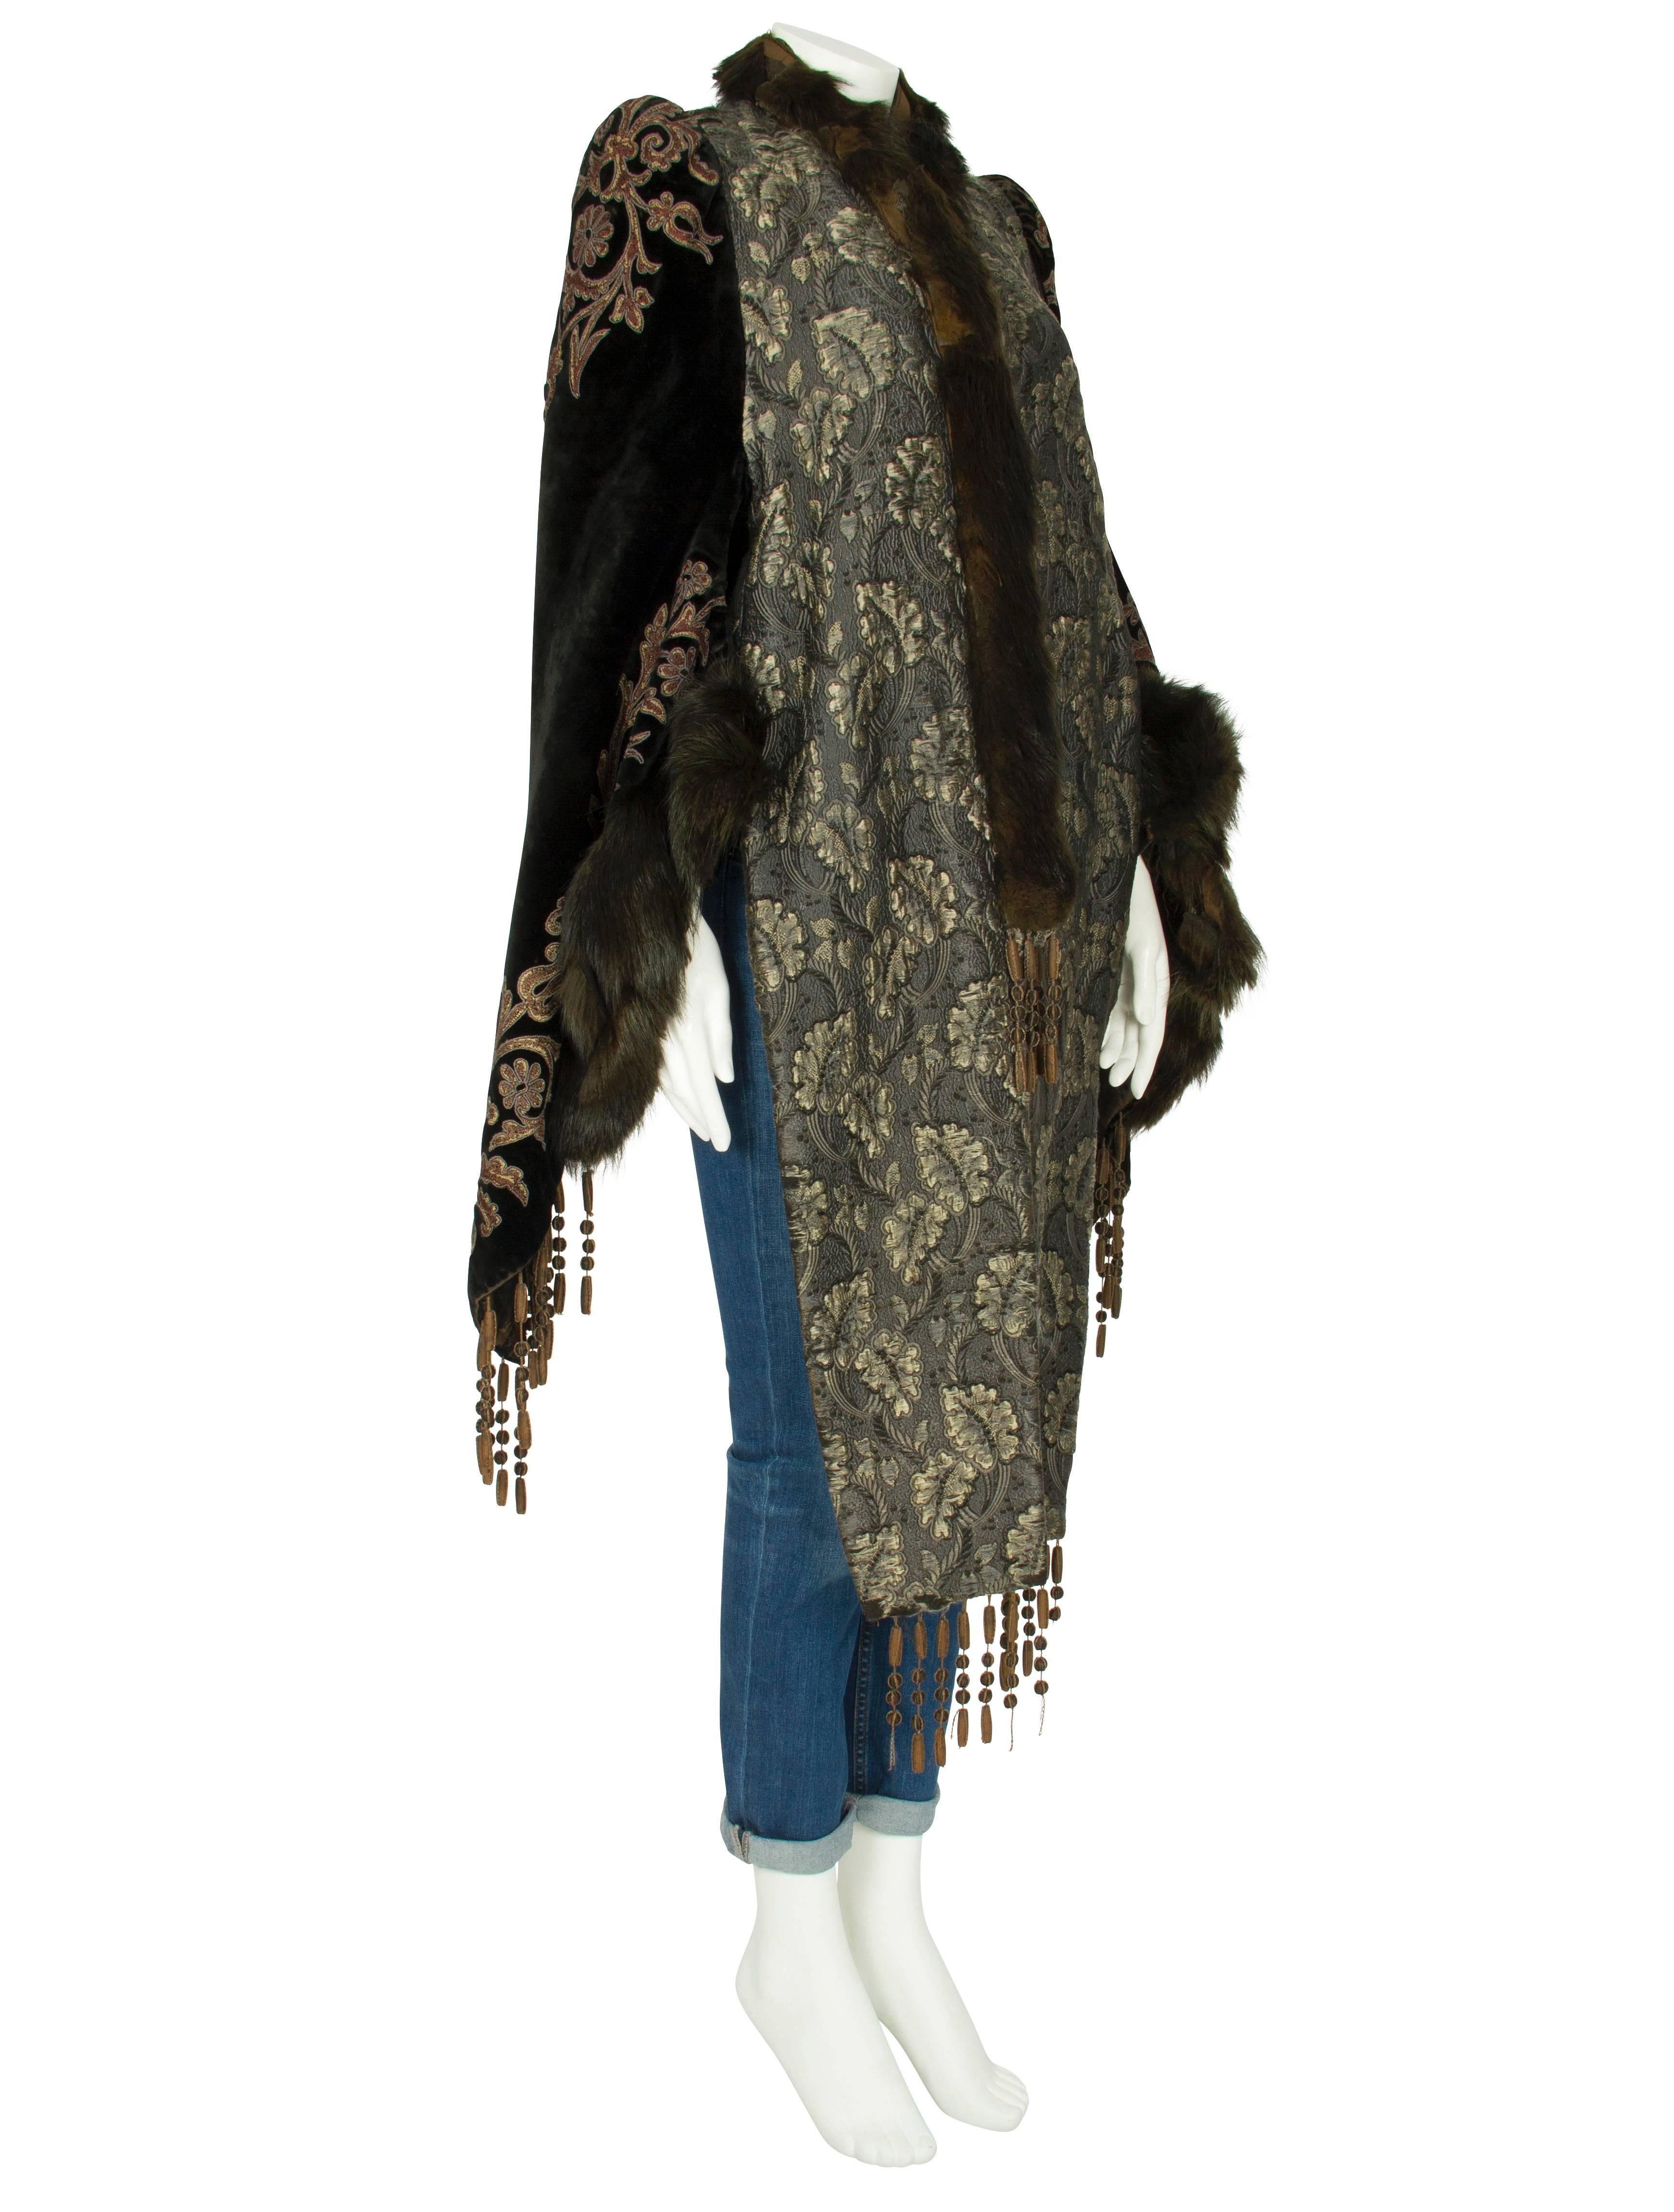 Black Luxurious 1900's Extravagant Velvet Jacket with Fur Trim For Sale